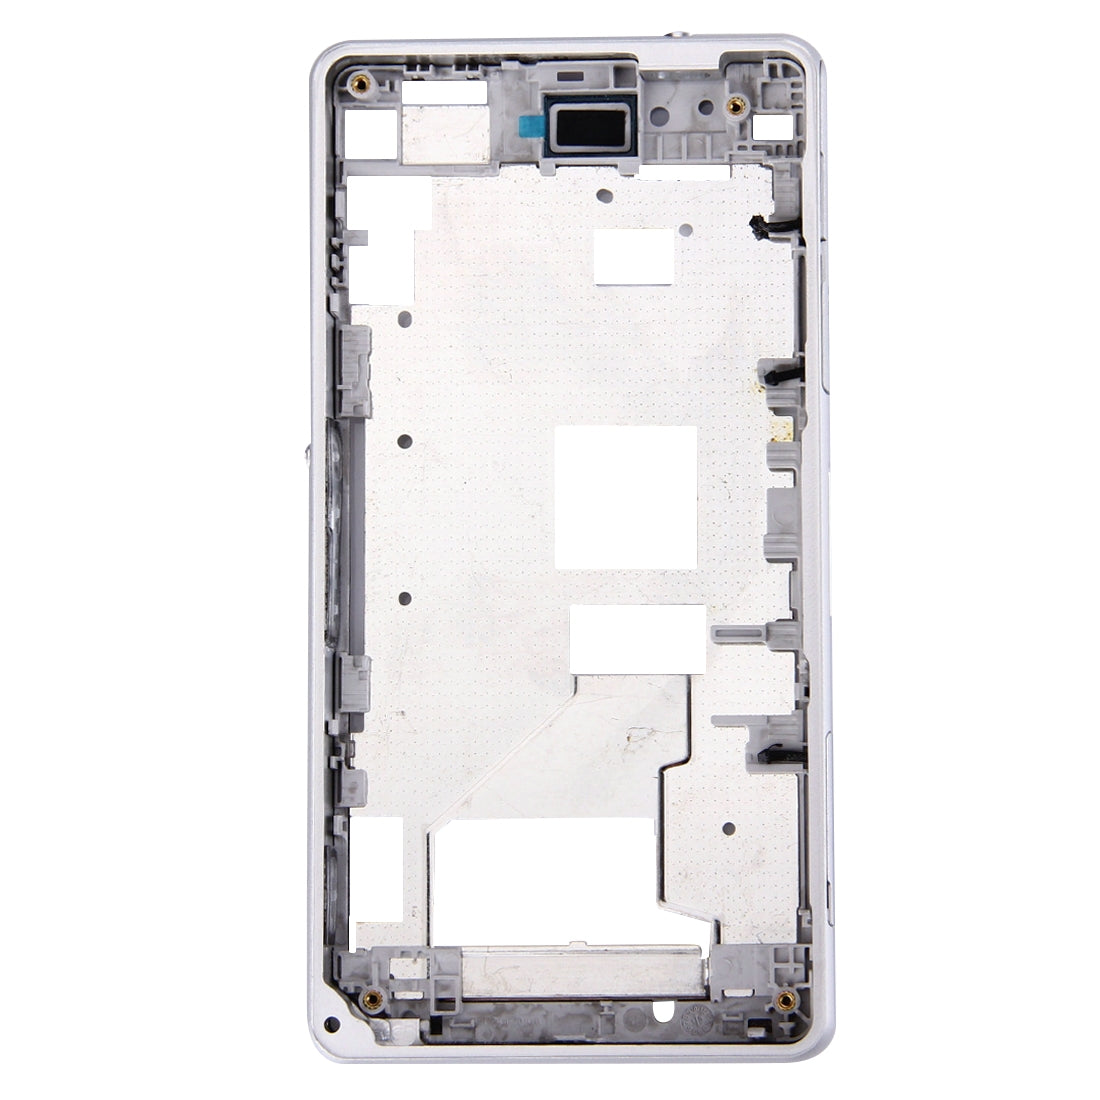 Chassis Intermediate Frame LCD Sony Xperia Z1 Compact / Mini White